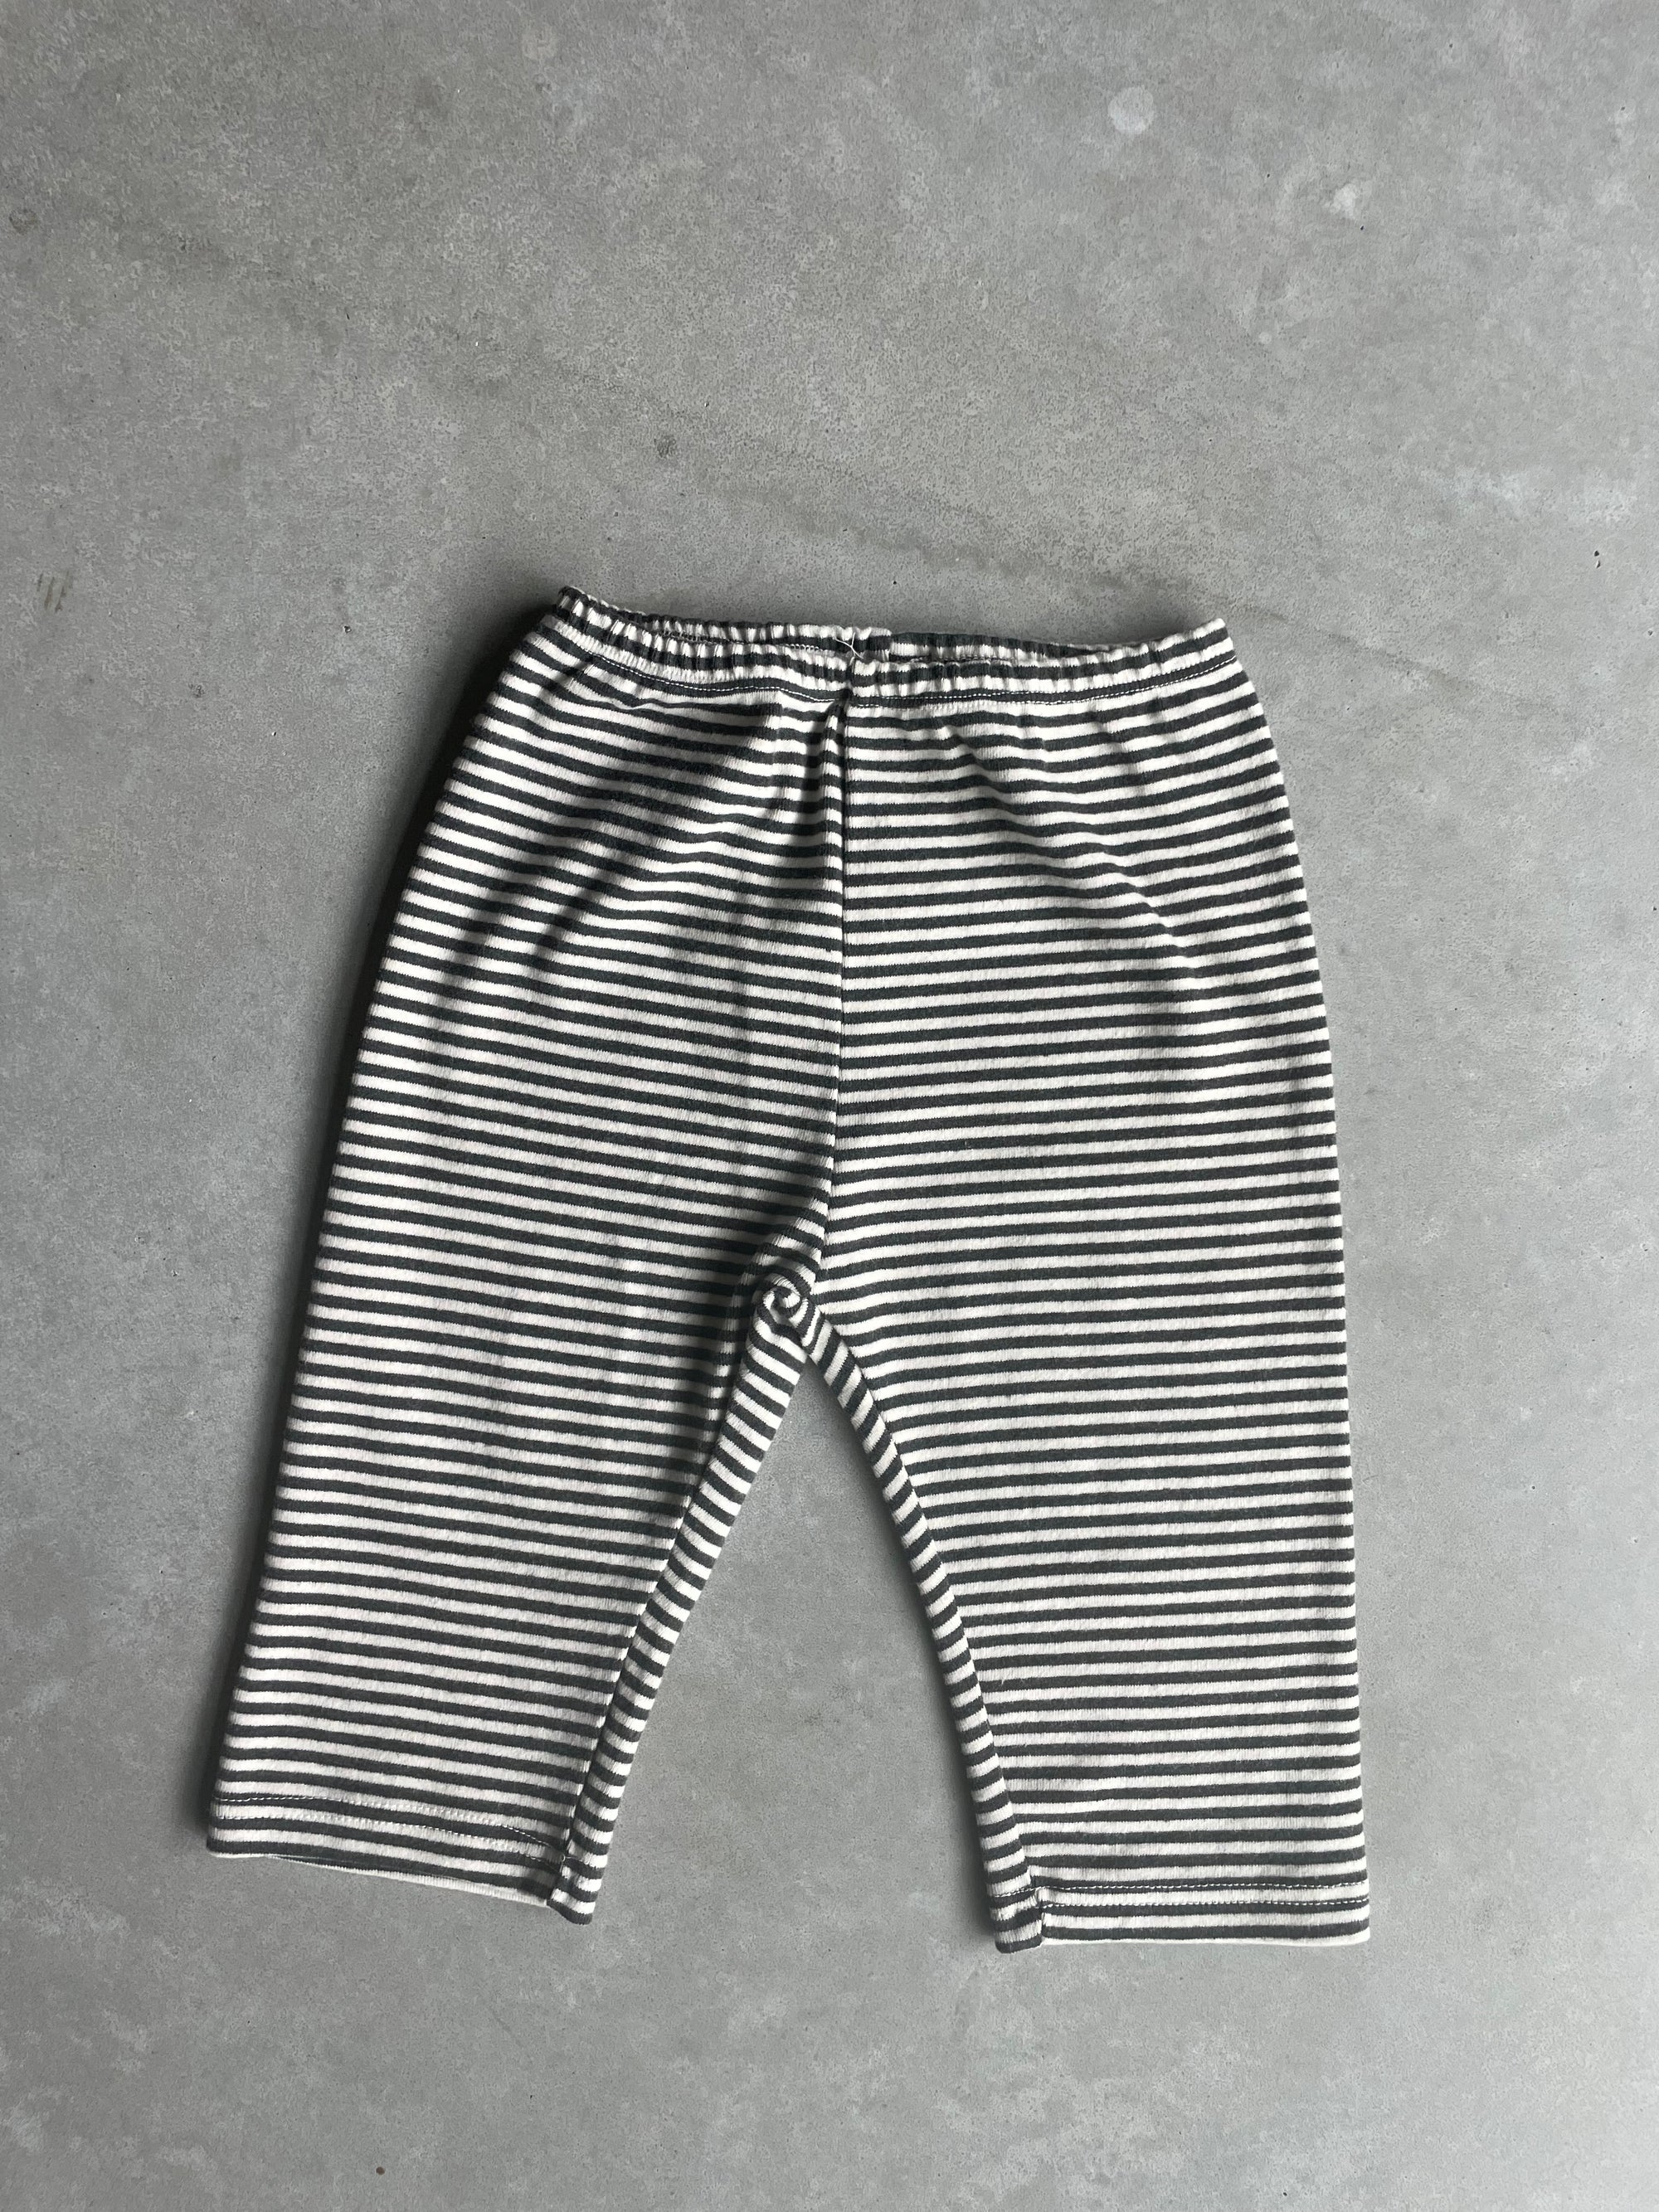 Striped play pants